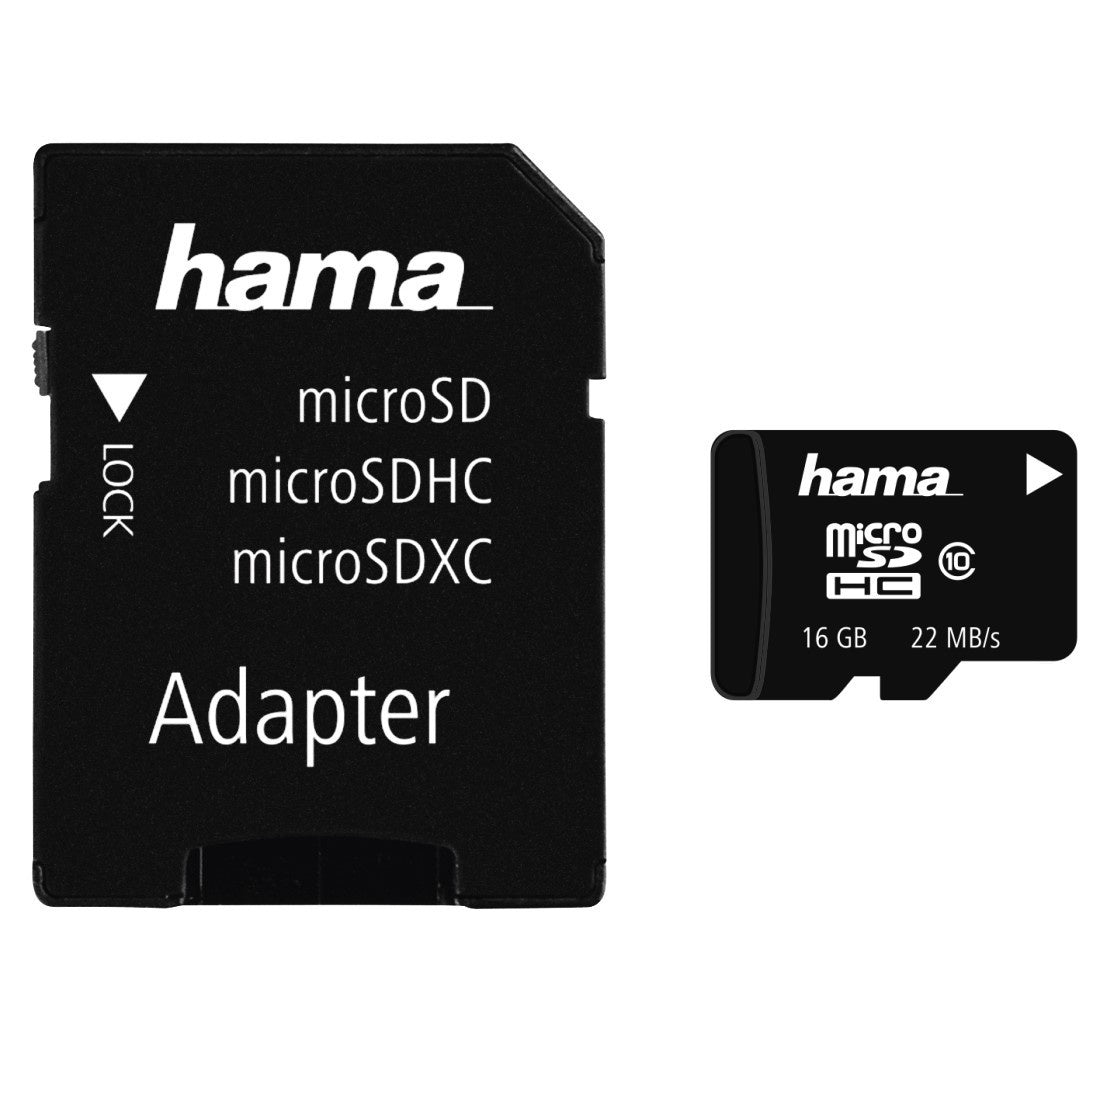 HAMA FLASH MEMORY CARD - 16 GB MICROSDHC - CLASS 10